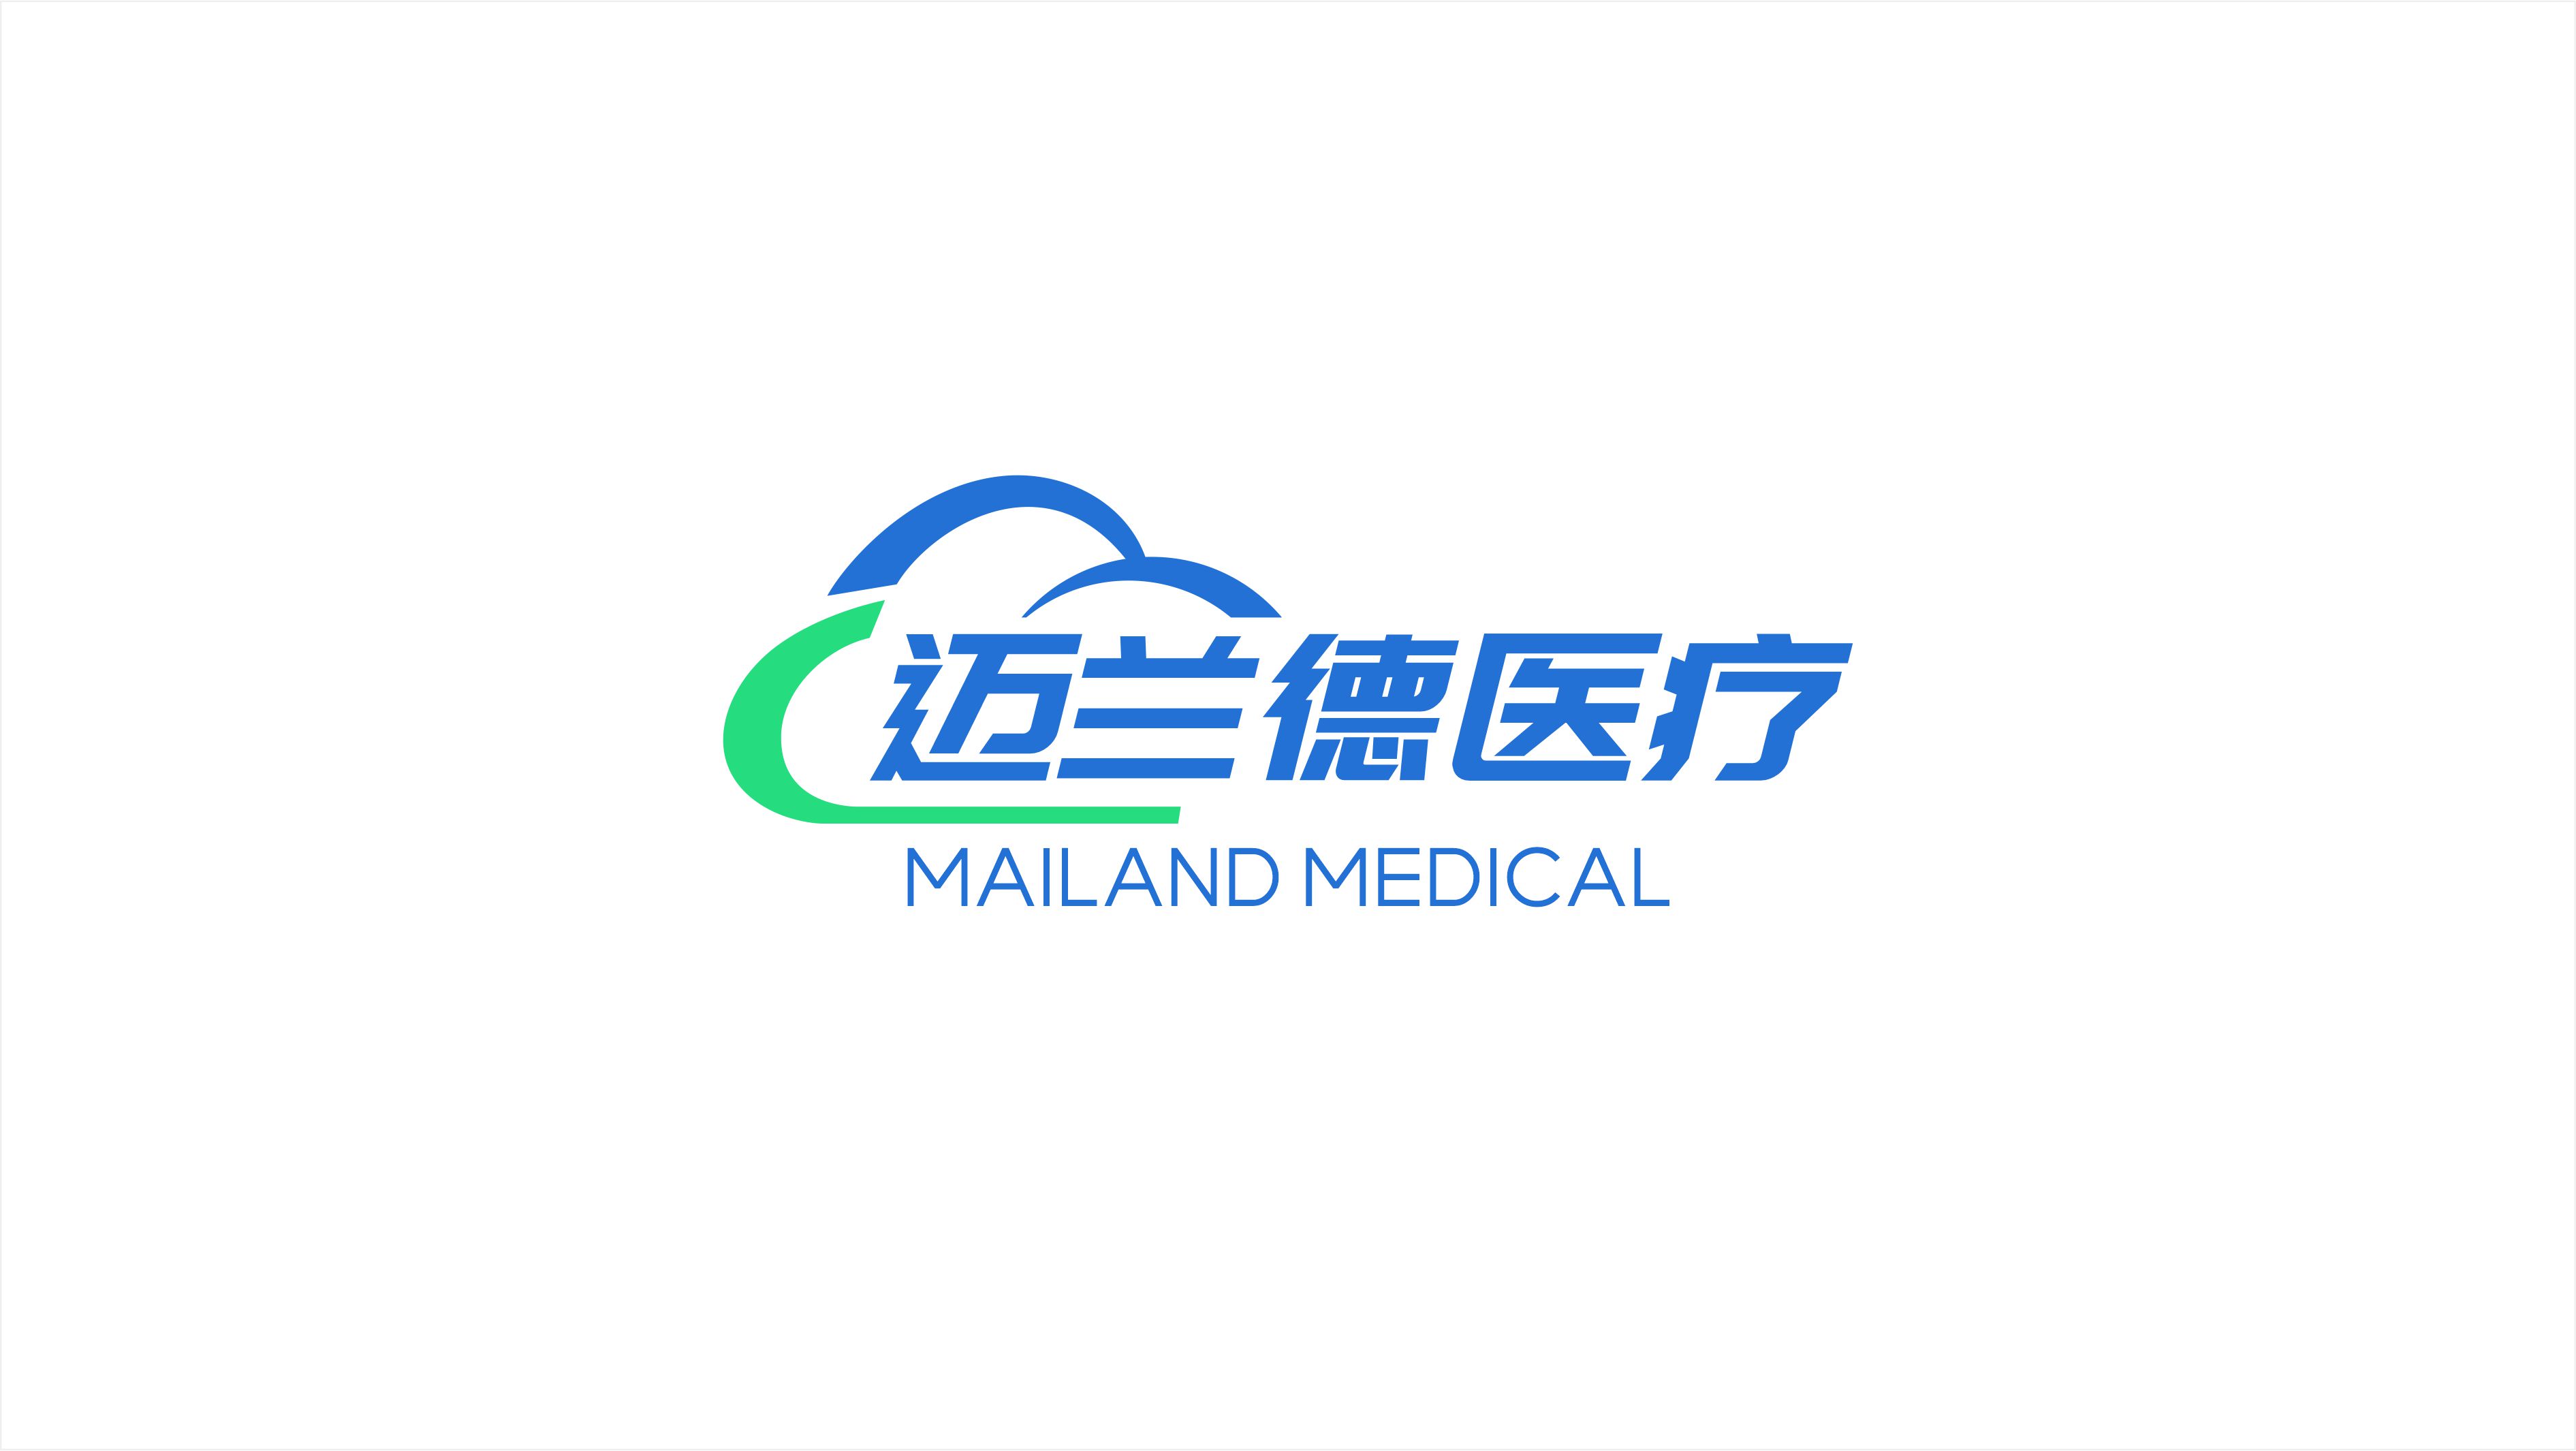 医疗logo设计